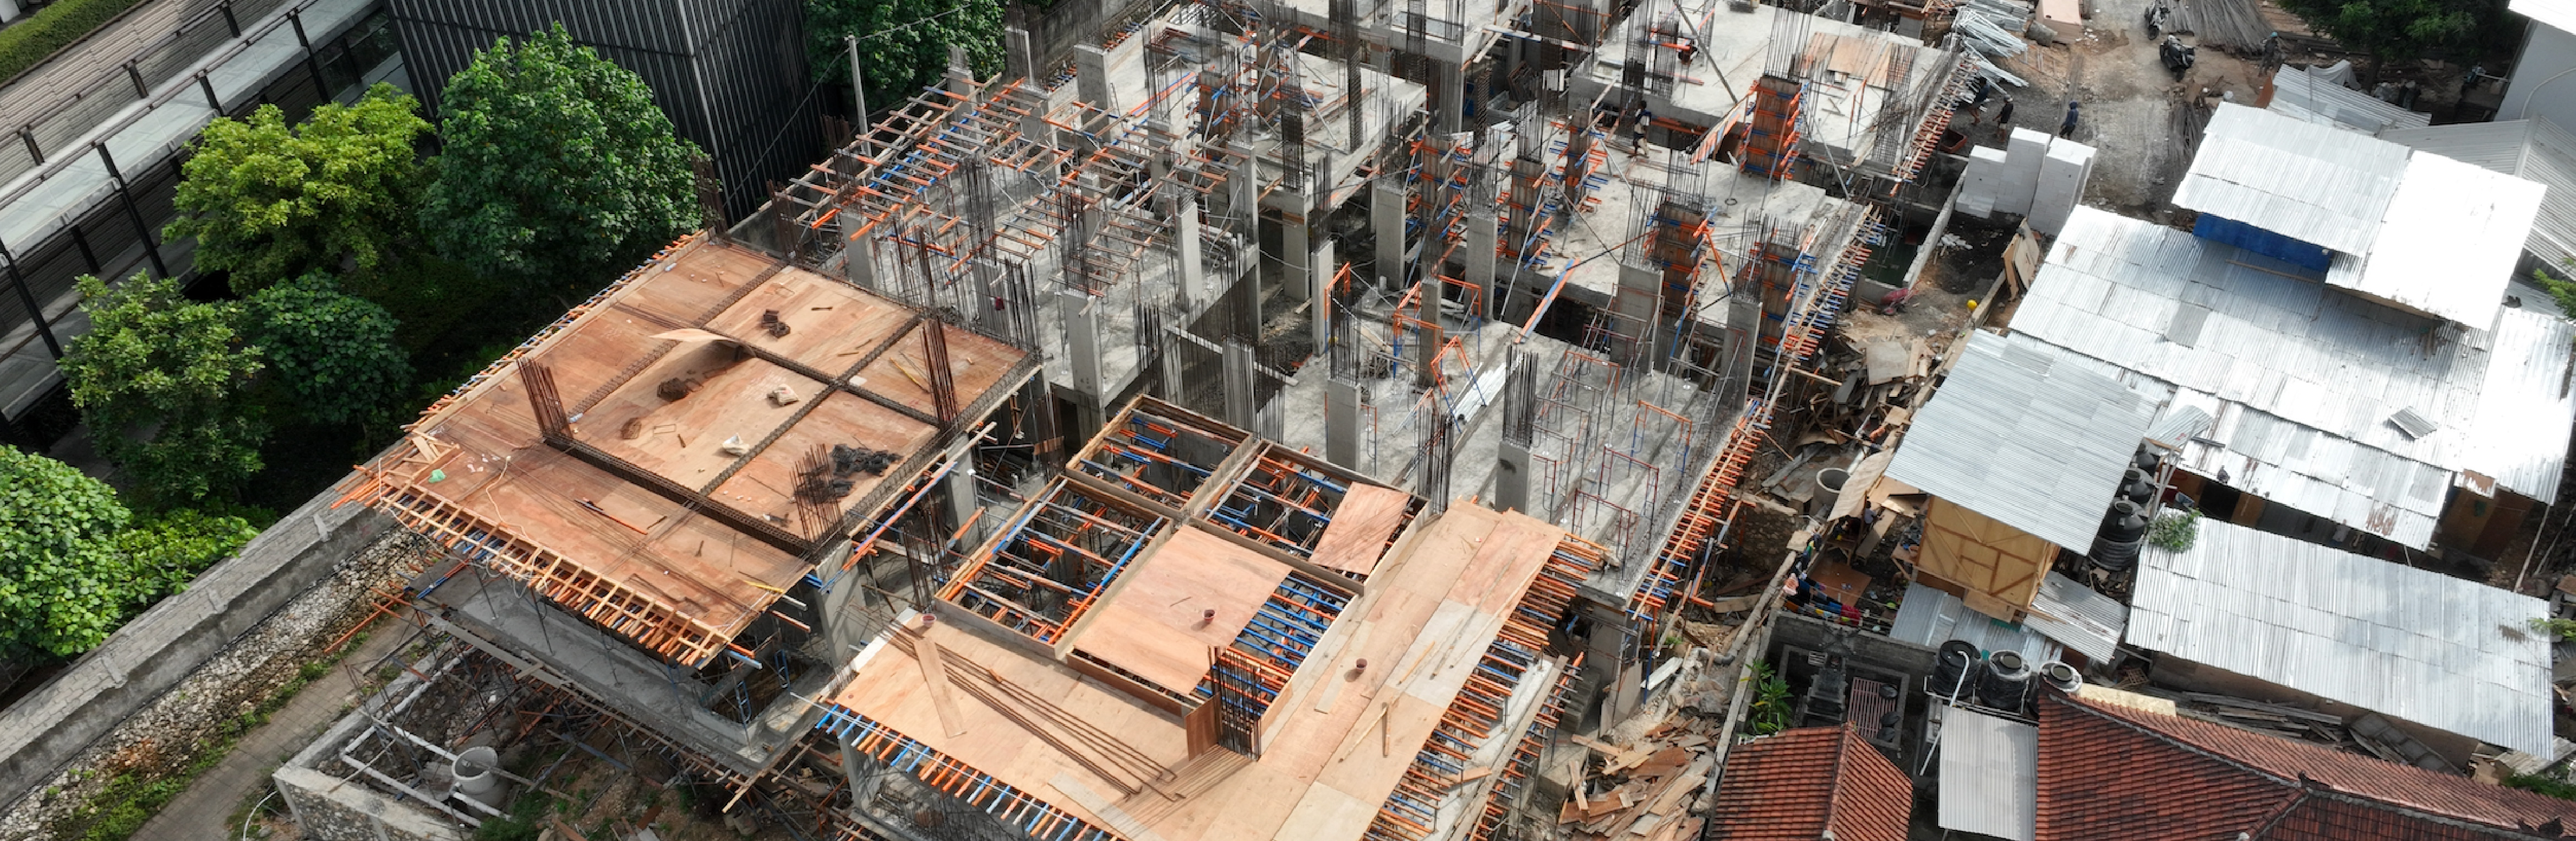 Body Factory Bali Lifestyle Residence Canggu - Construction Update 2